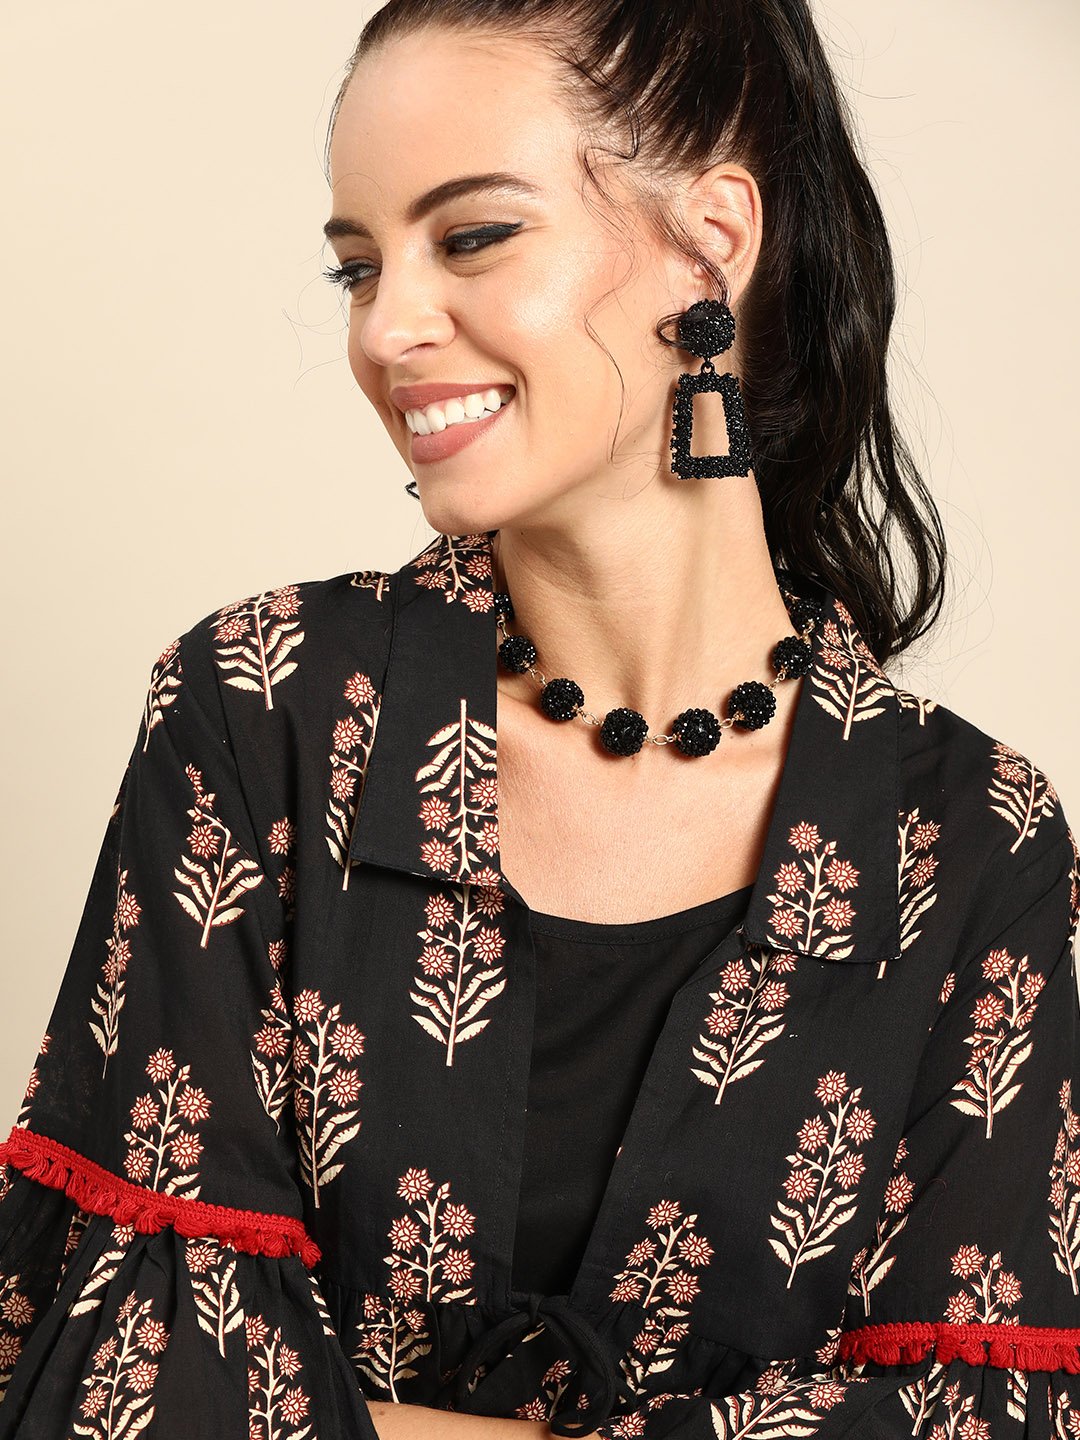 Women's Nayo Black Calf Length Three-Quarter Sleeves Straight Floral Printed Cotton Kurta With Jacket - Nayo Clothing